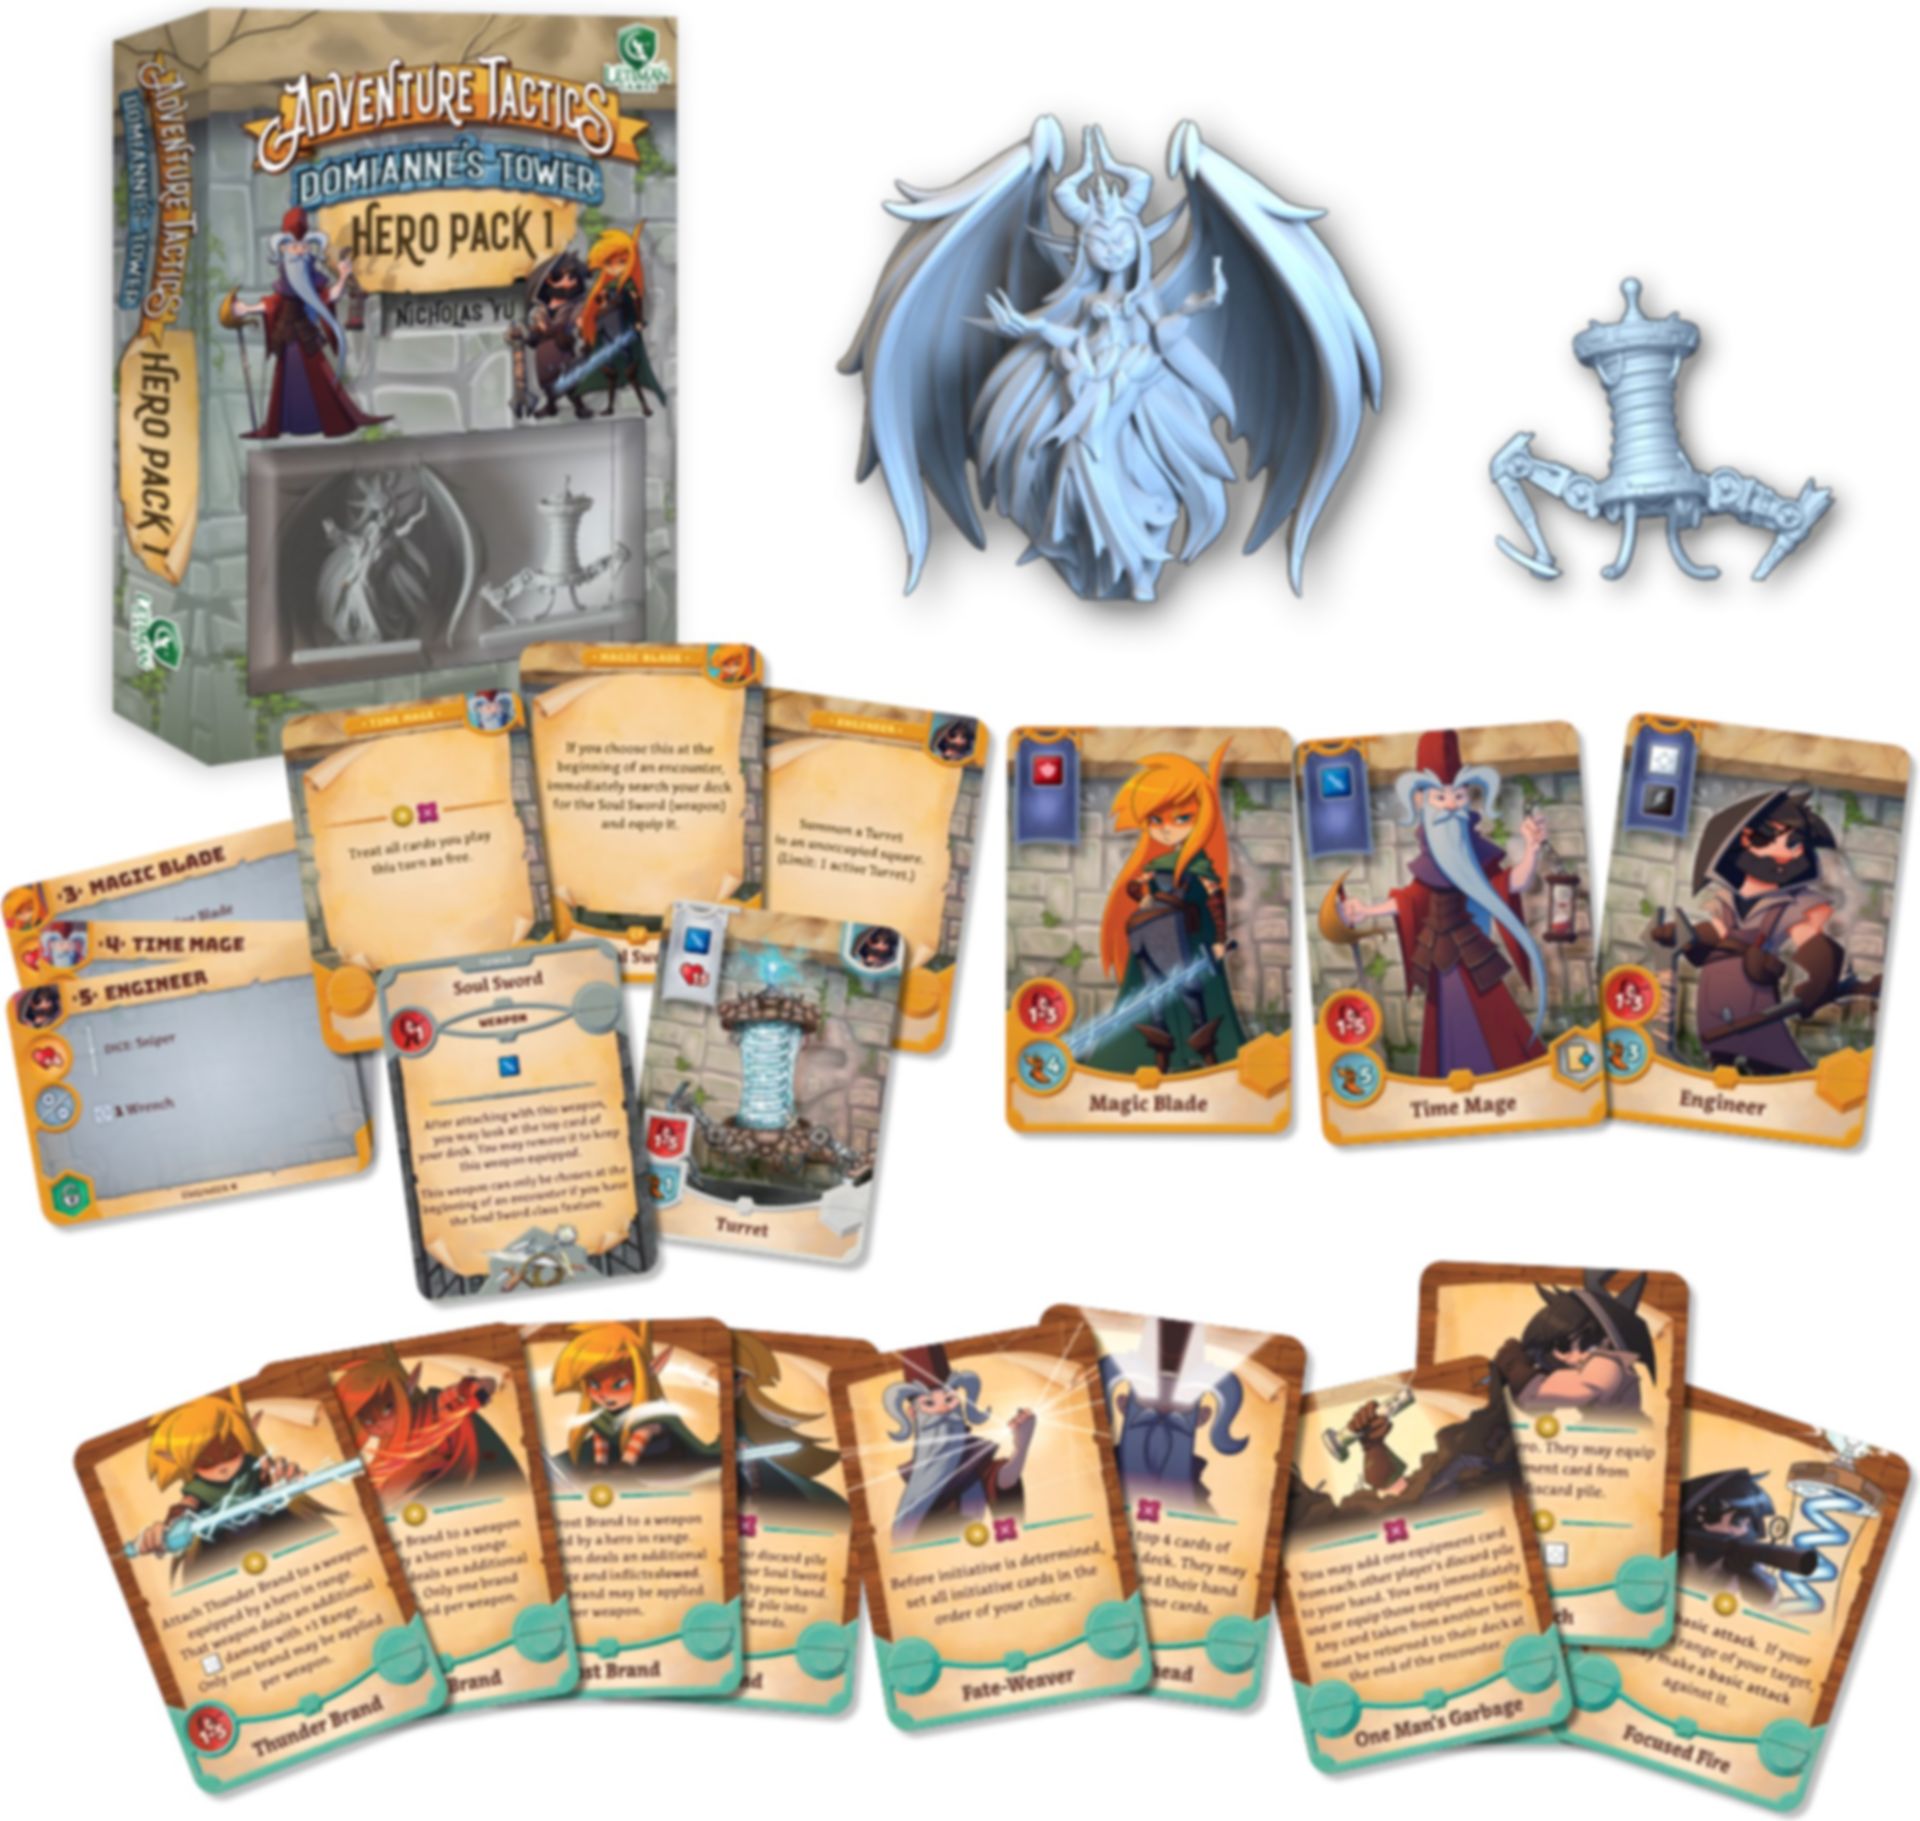 Adventure Tactics: Domianne's Tower – Hero Pack 1 componenti